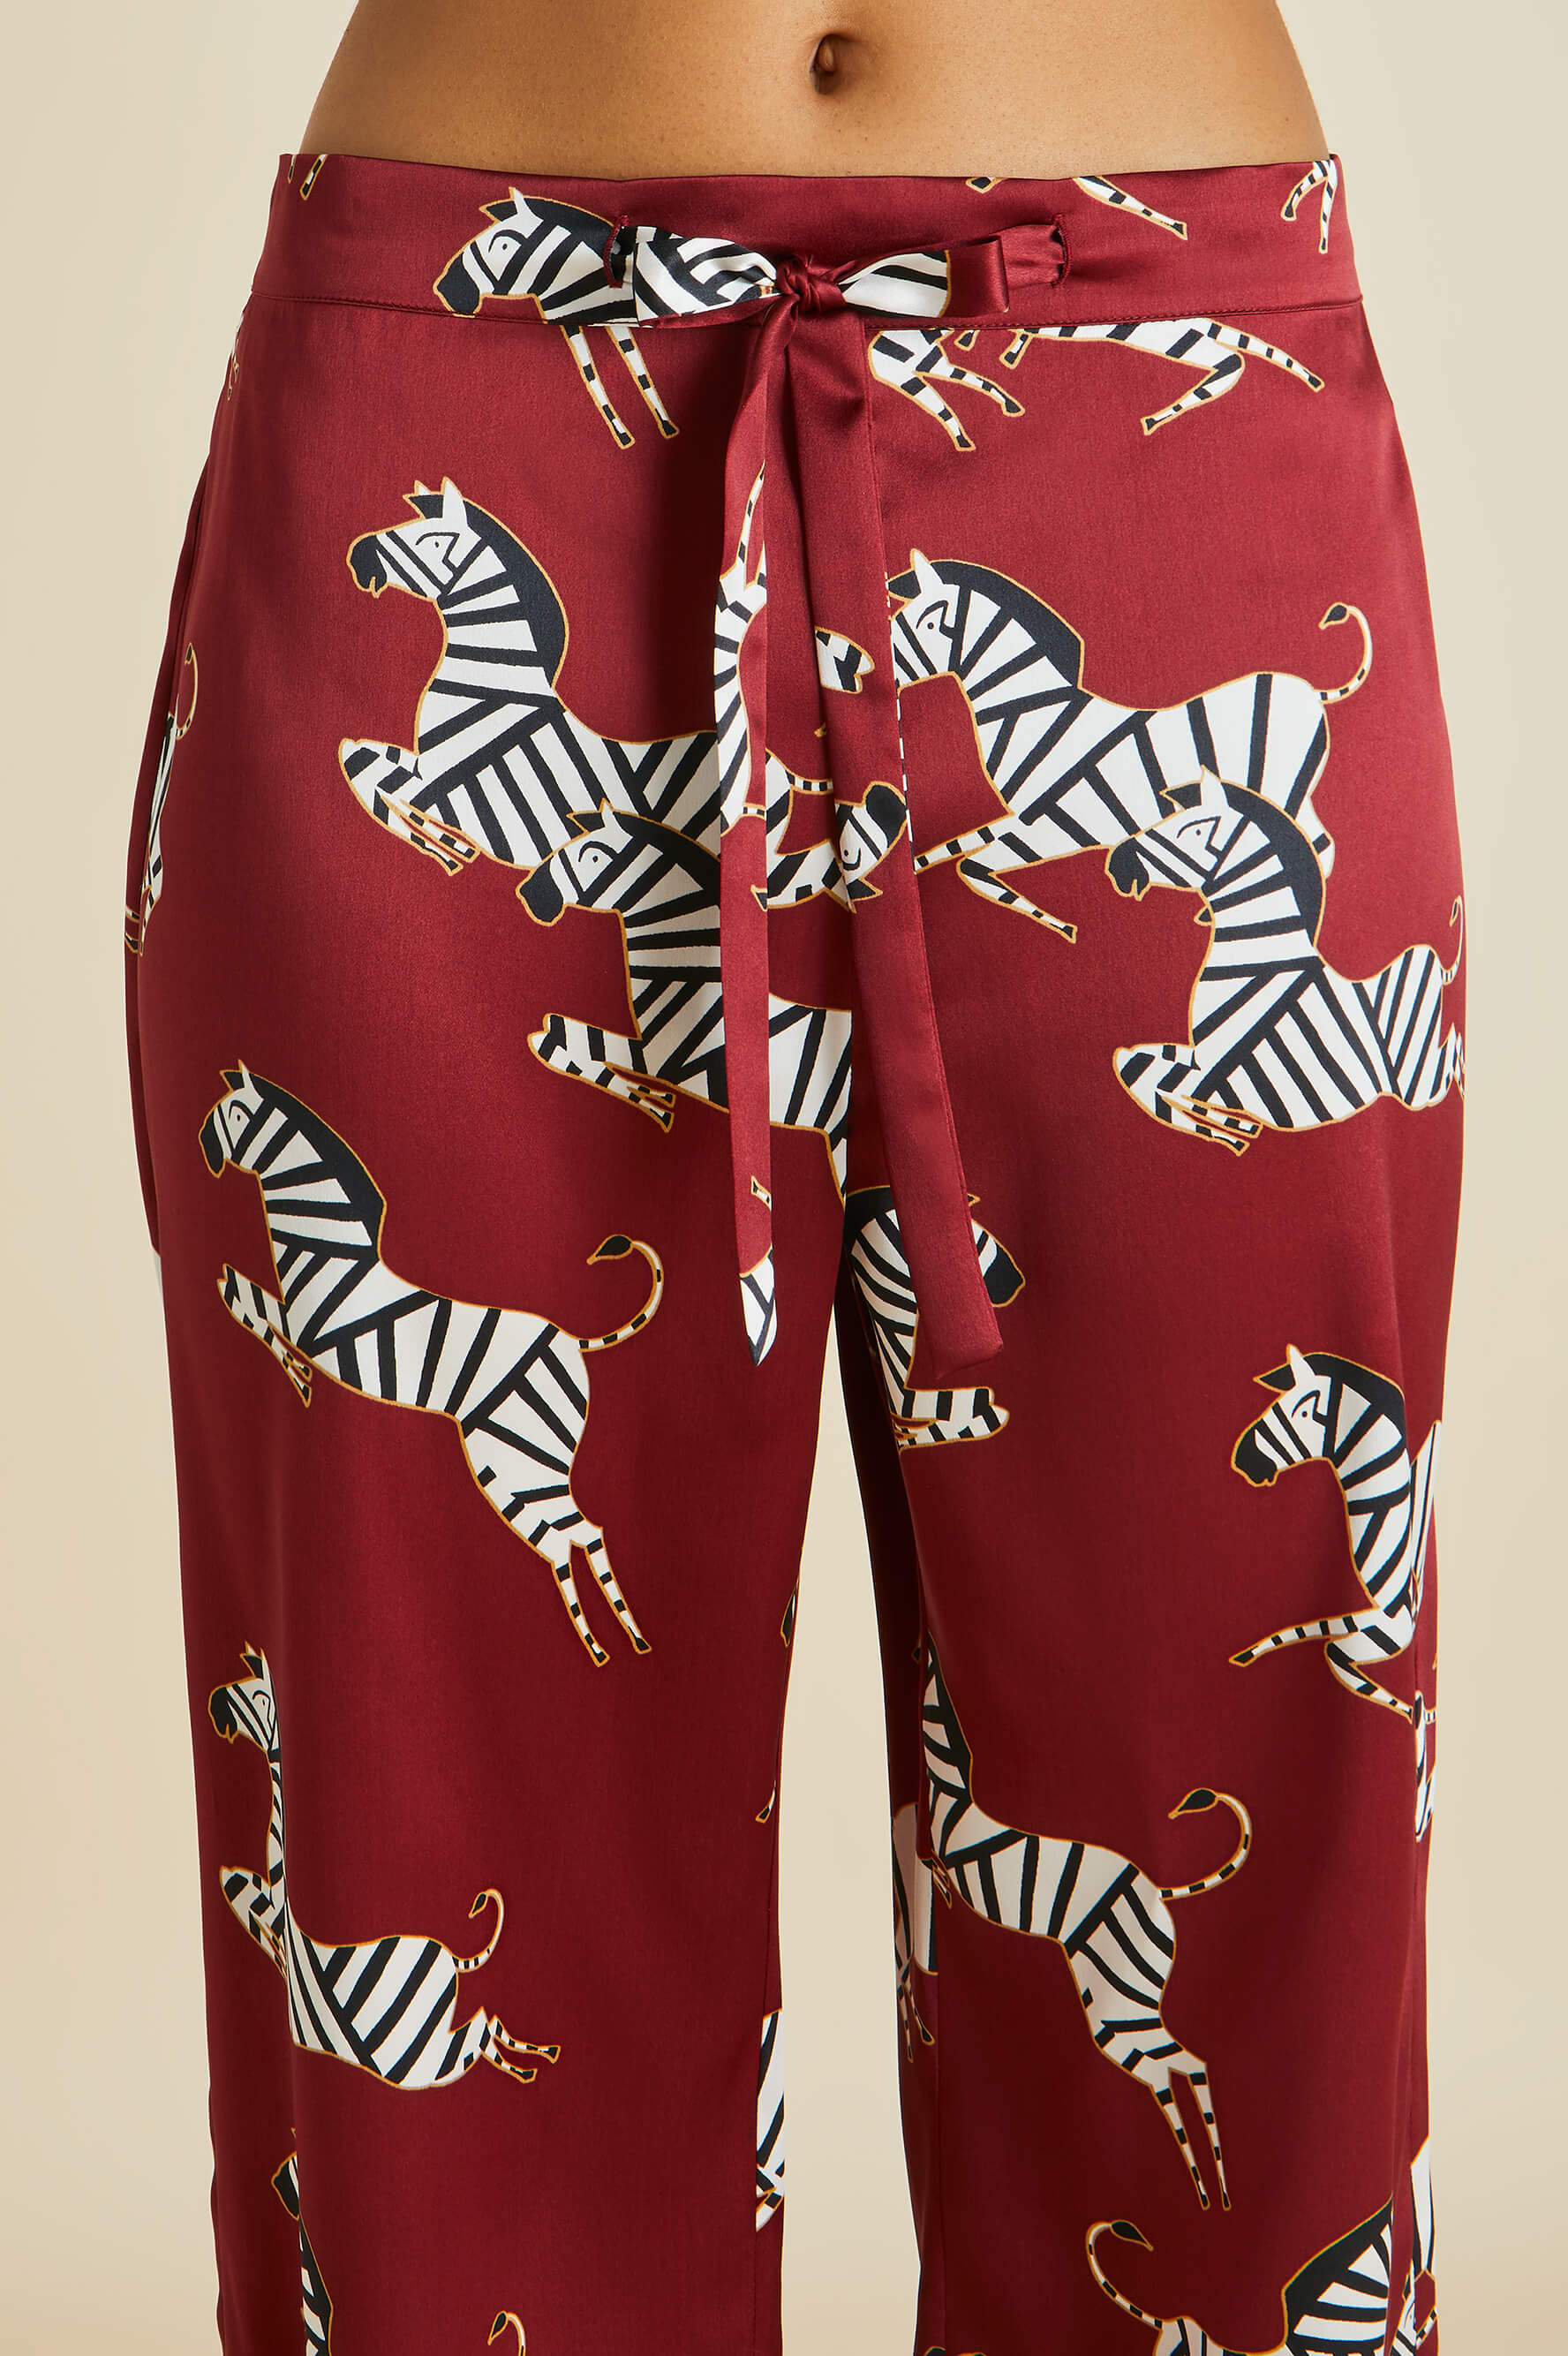 Q014 Pink Zebra Summer Women Short Sleeves Short Pants Pajamas Set